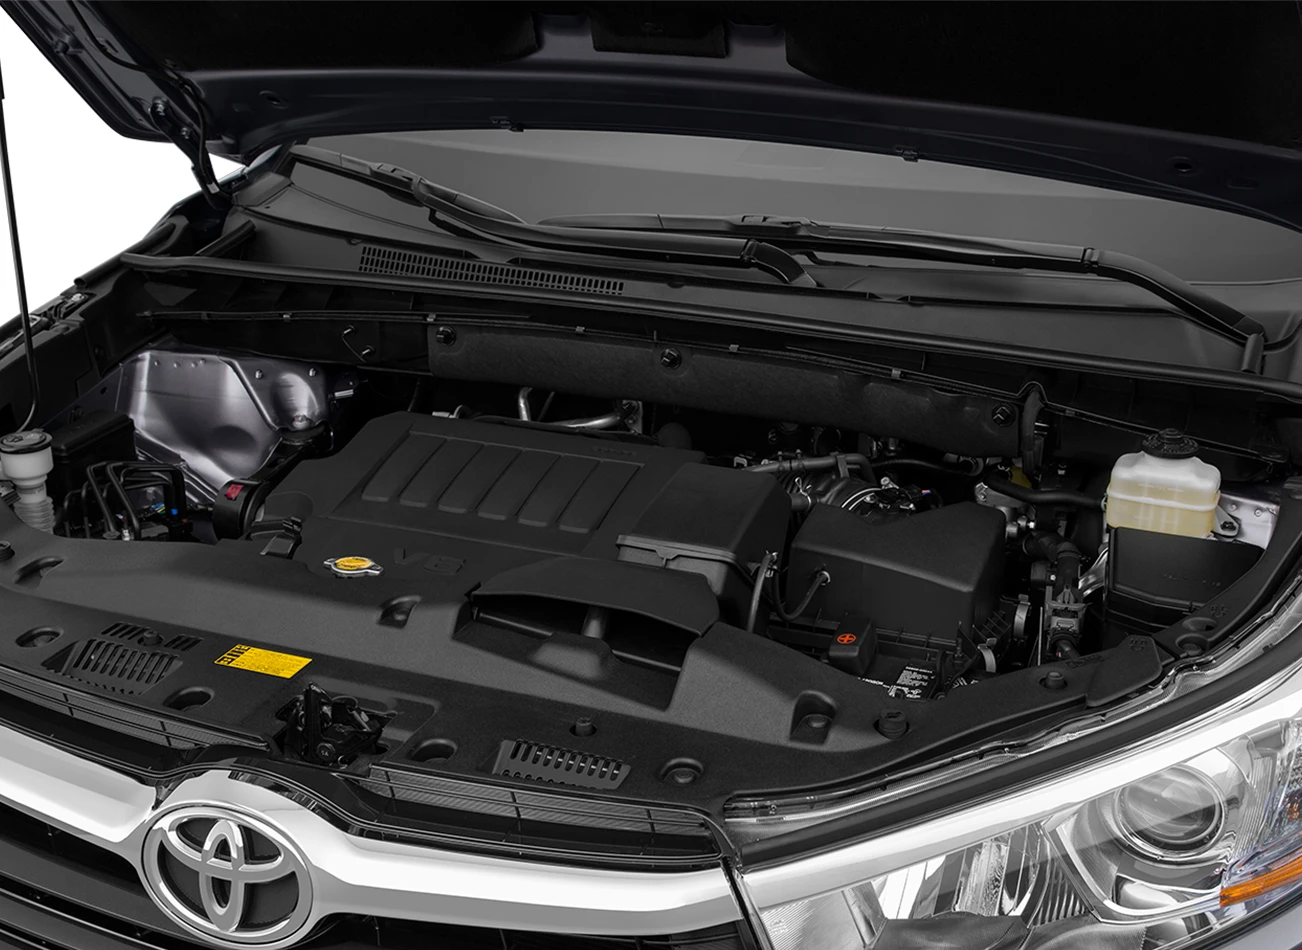 2015 Toyota Highlander Review: Engine | CarMax